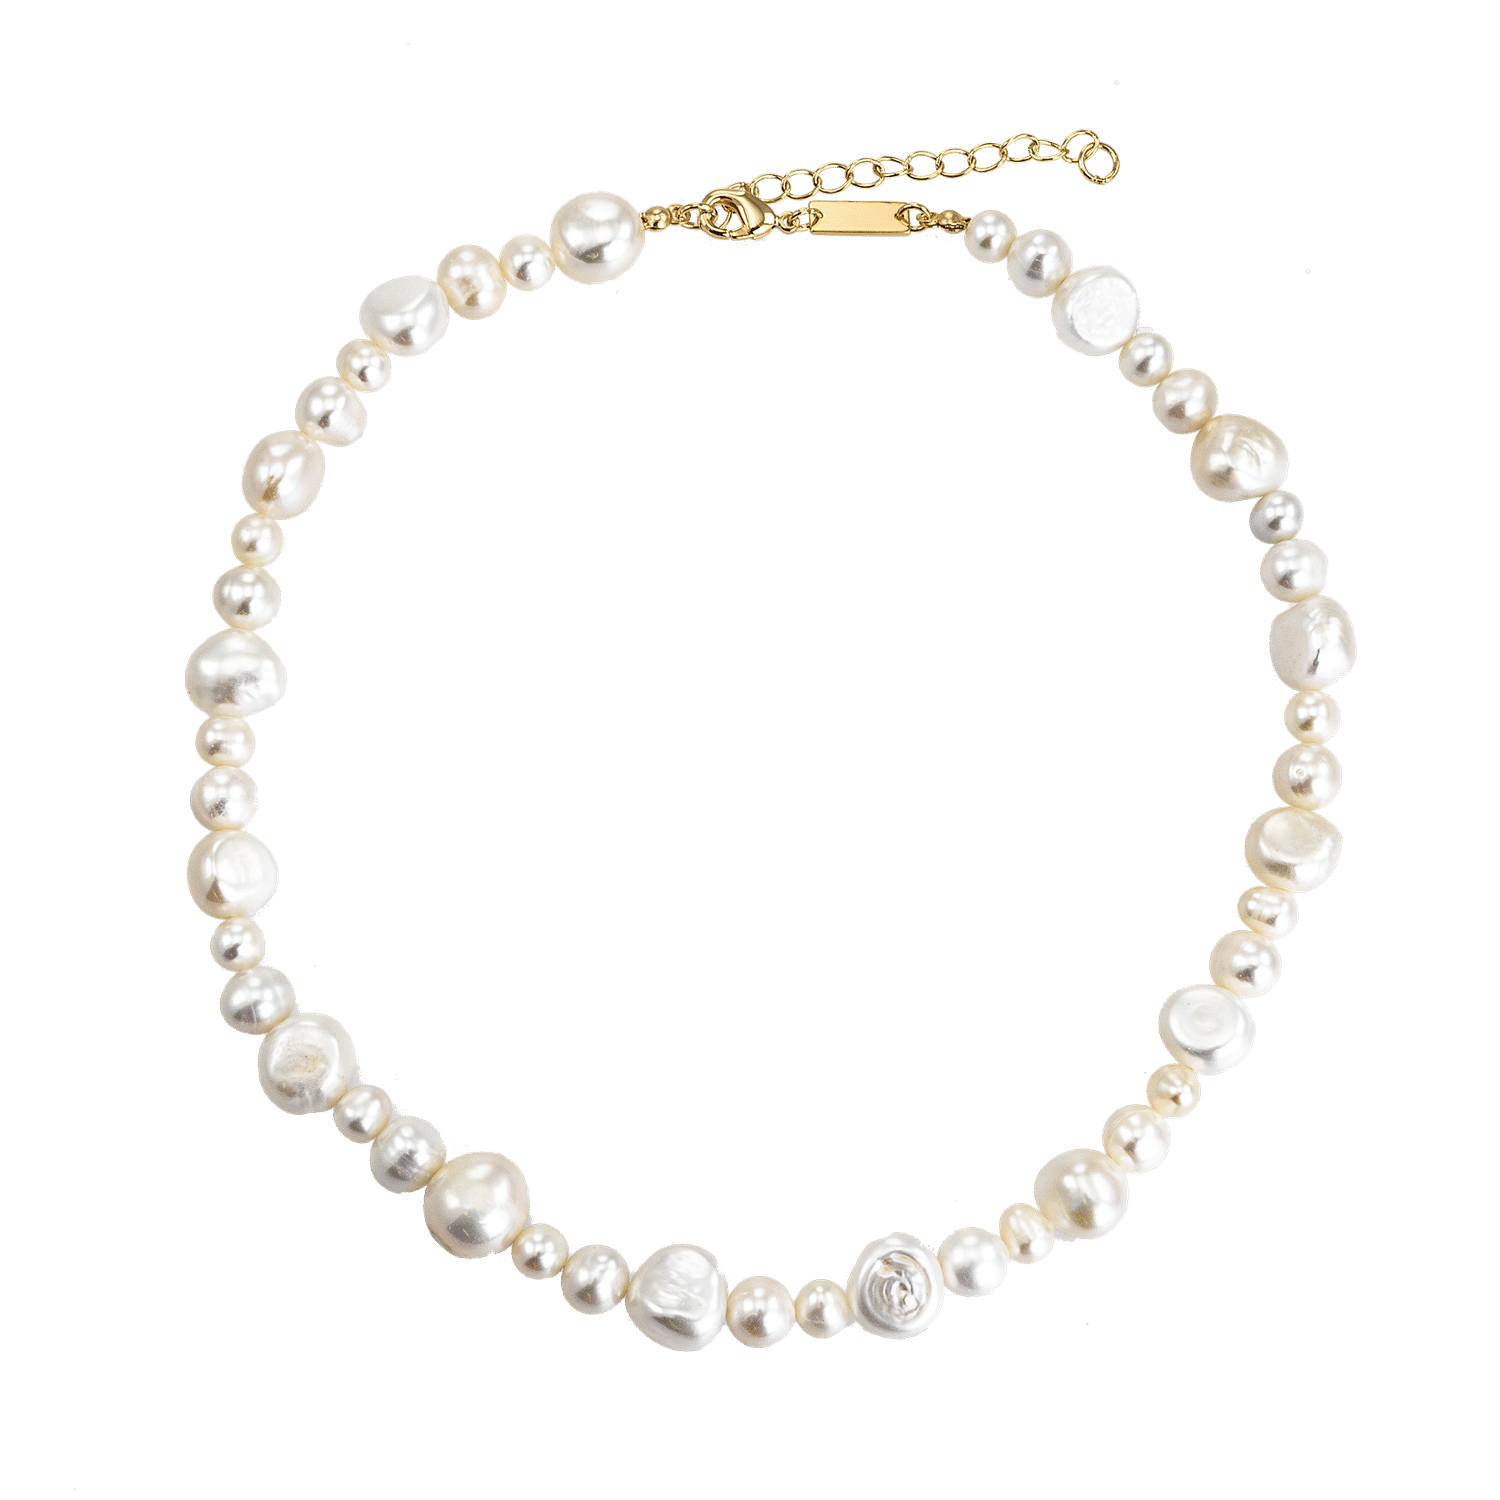 Emilia Freshwater Pearl Necklace 40-45 cm